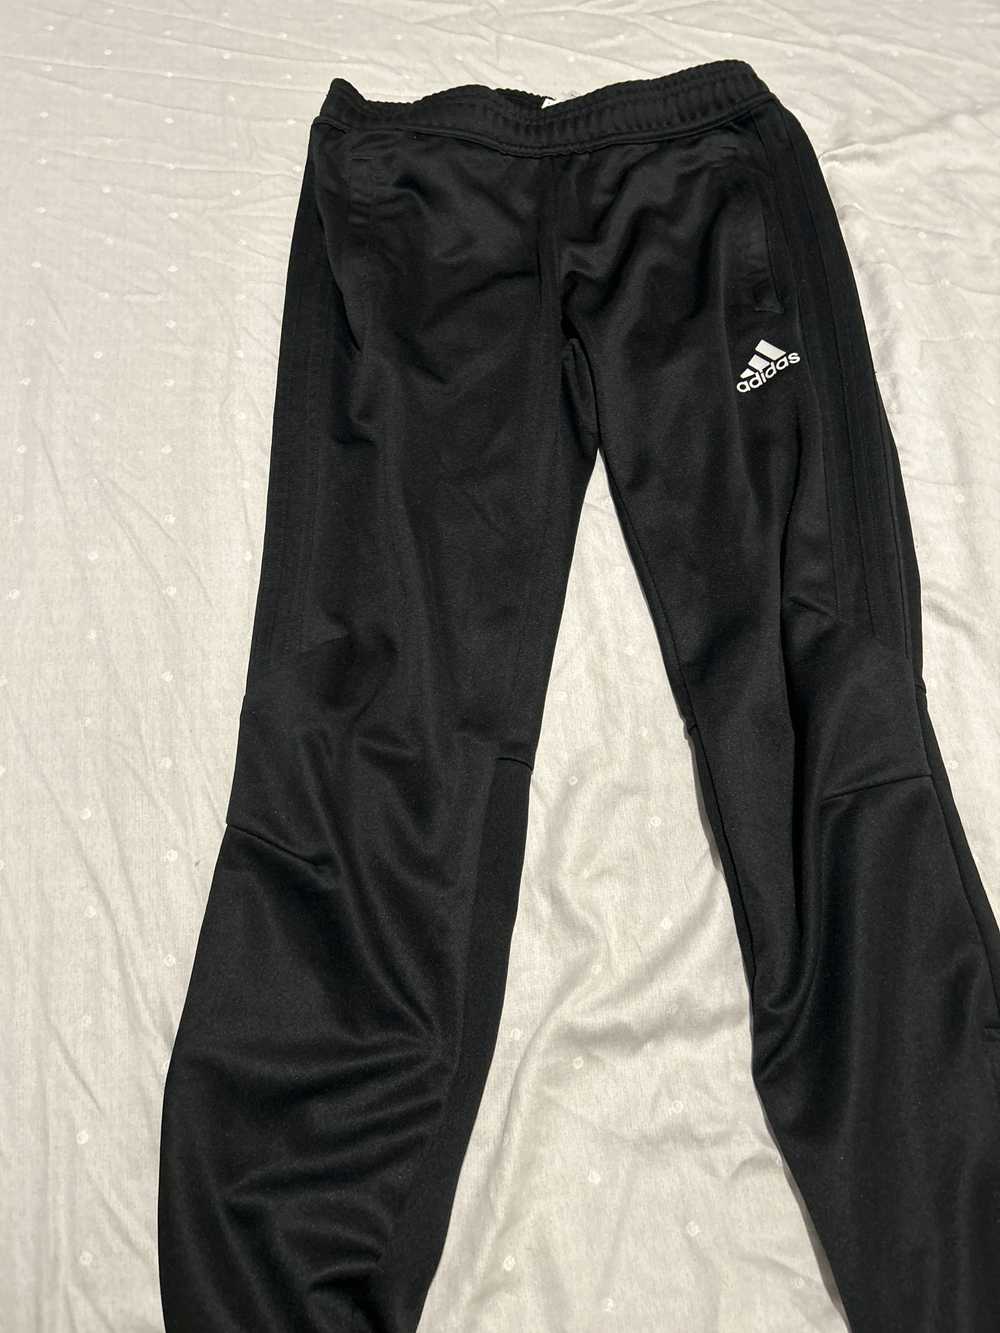 Adidas XS black adidas sweatpants - image 1